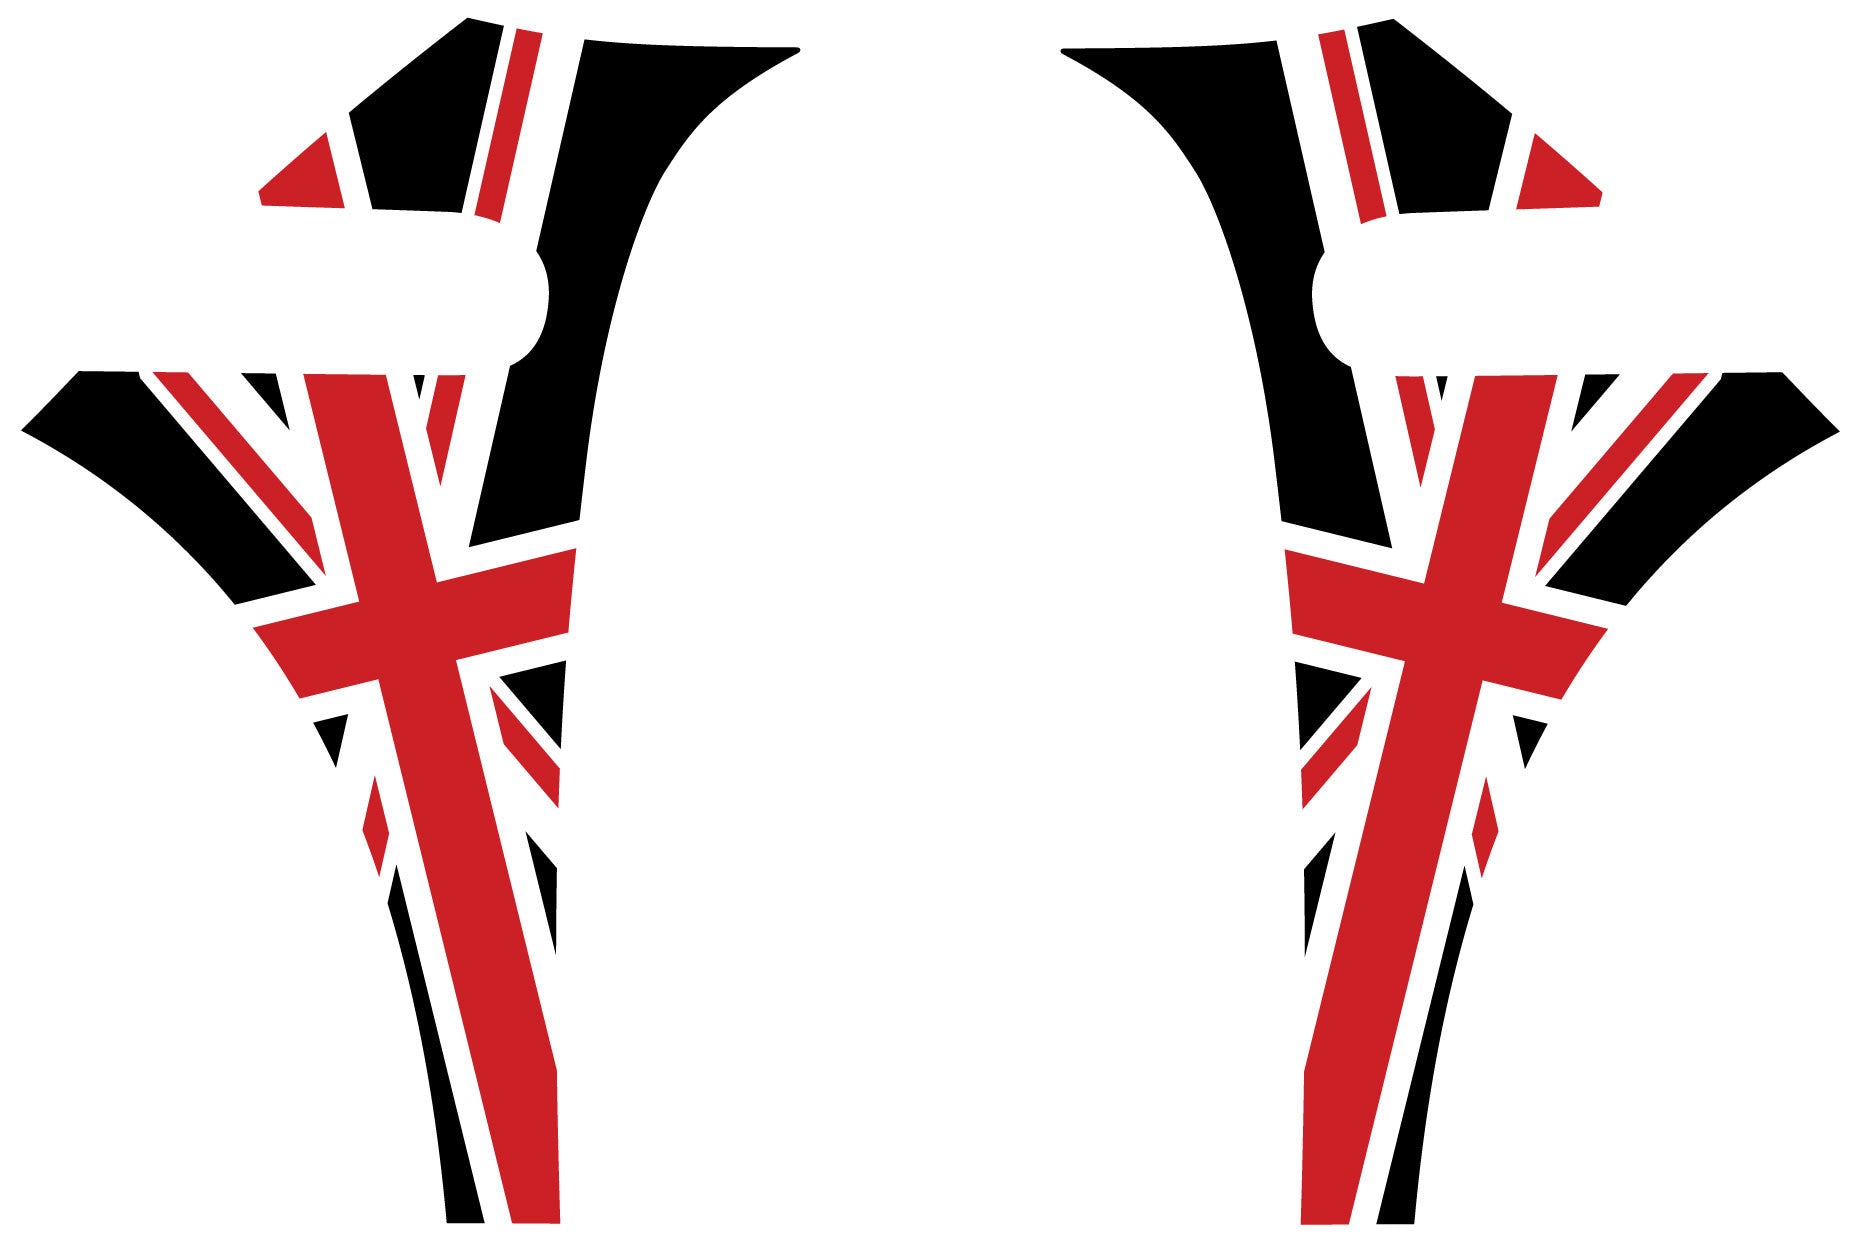 Mini Cooper (2007-2013) Union Jack English Flag A-Panel Red White Black Decal Kit - Exact Fit